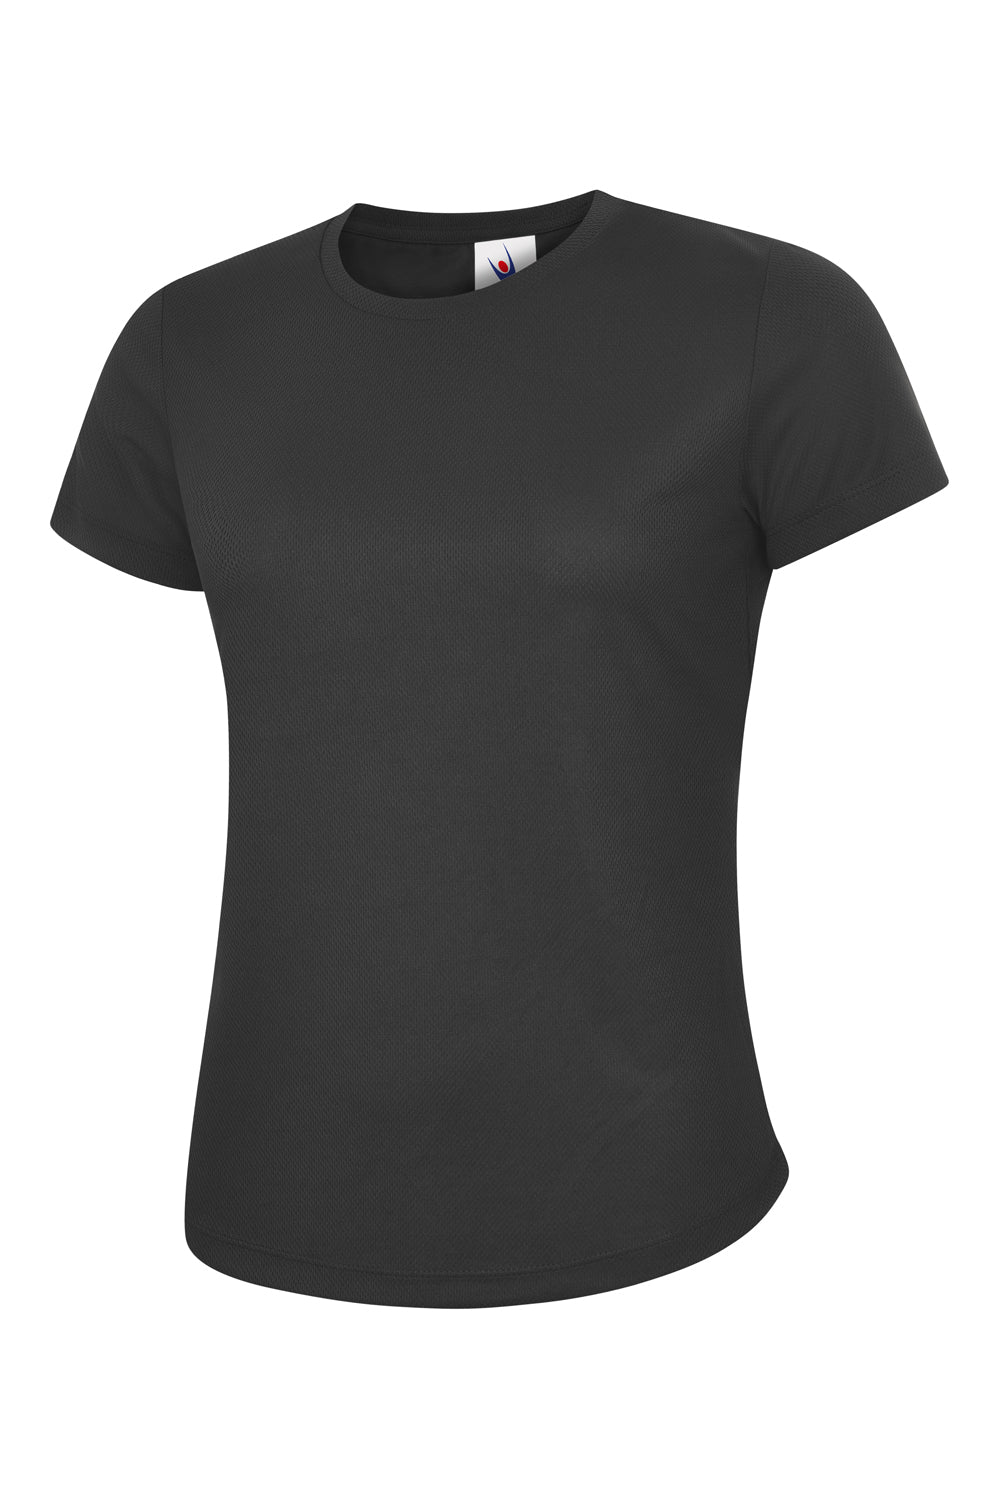 Uneek Ladies Ultra Cool T Shirt UC316 - Black